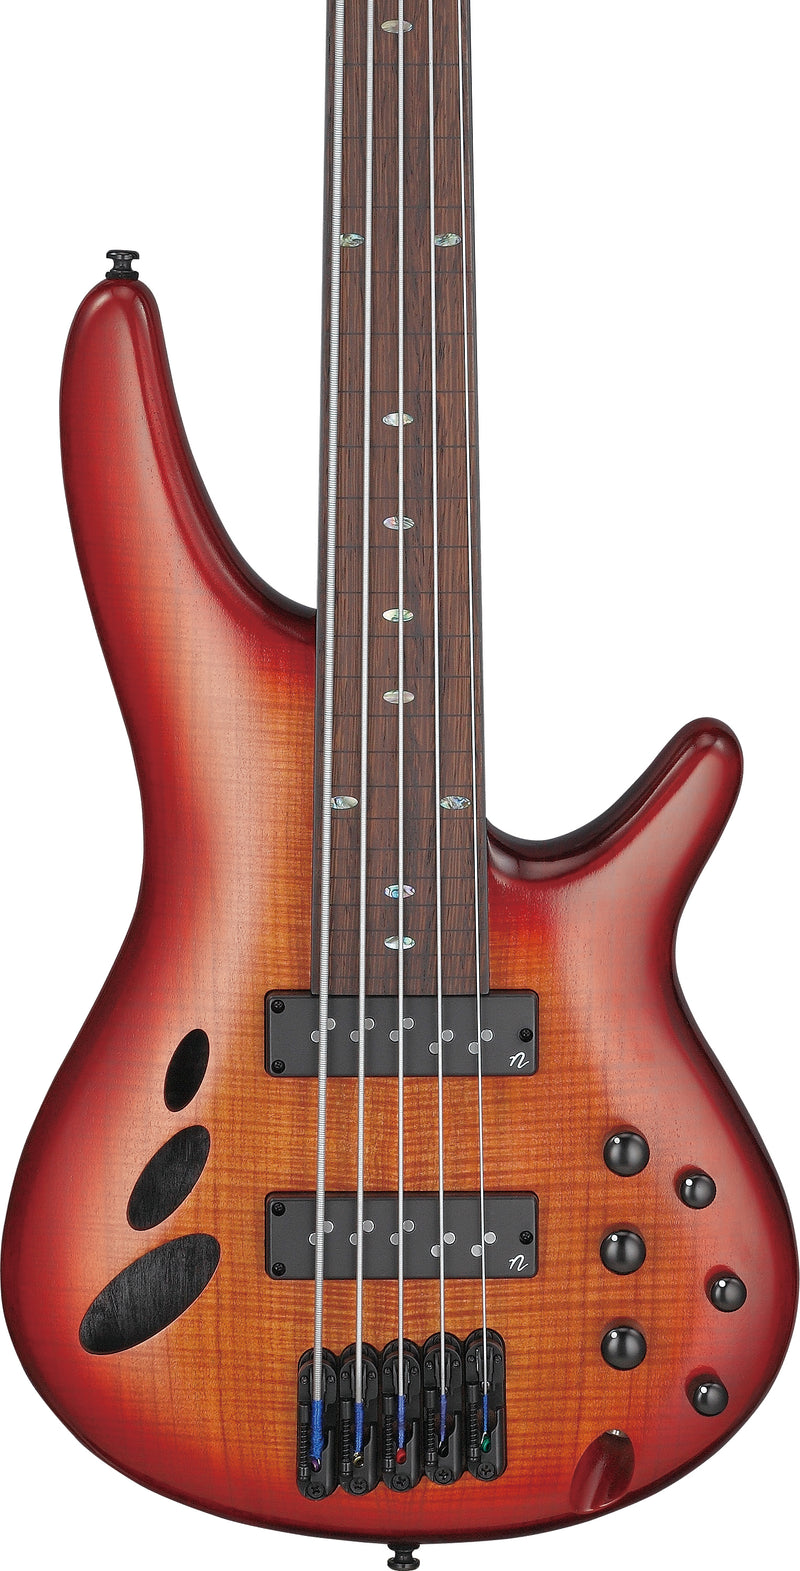 Ibanez SRD905FBTL SR Bass Workshop 5 Strings Fretless Electric Bass (Brown Topaz Burst Low Gloss)